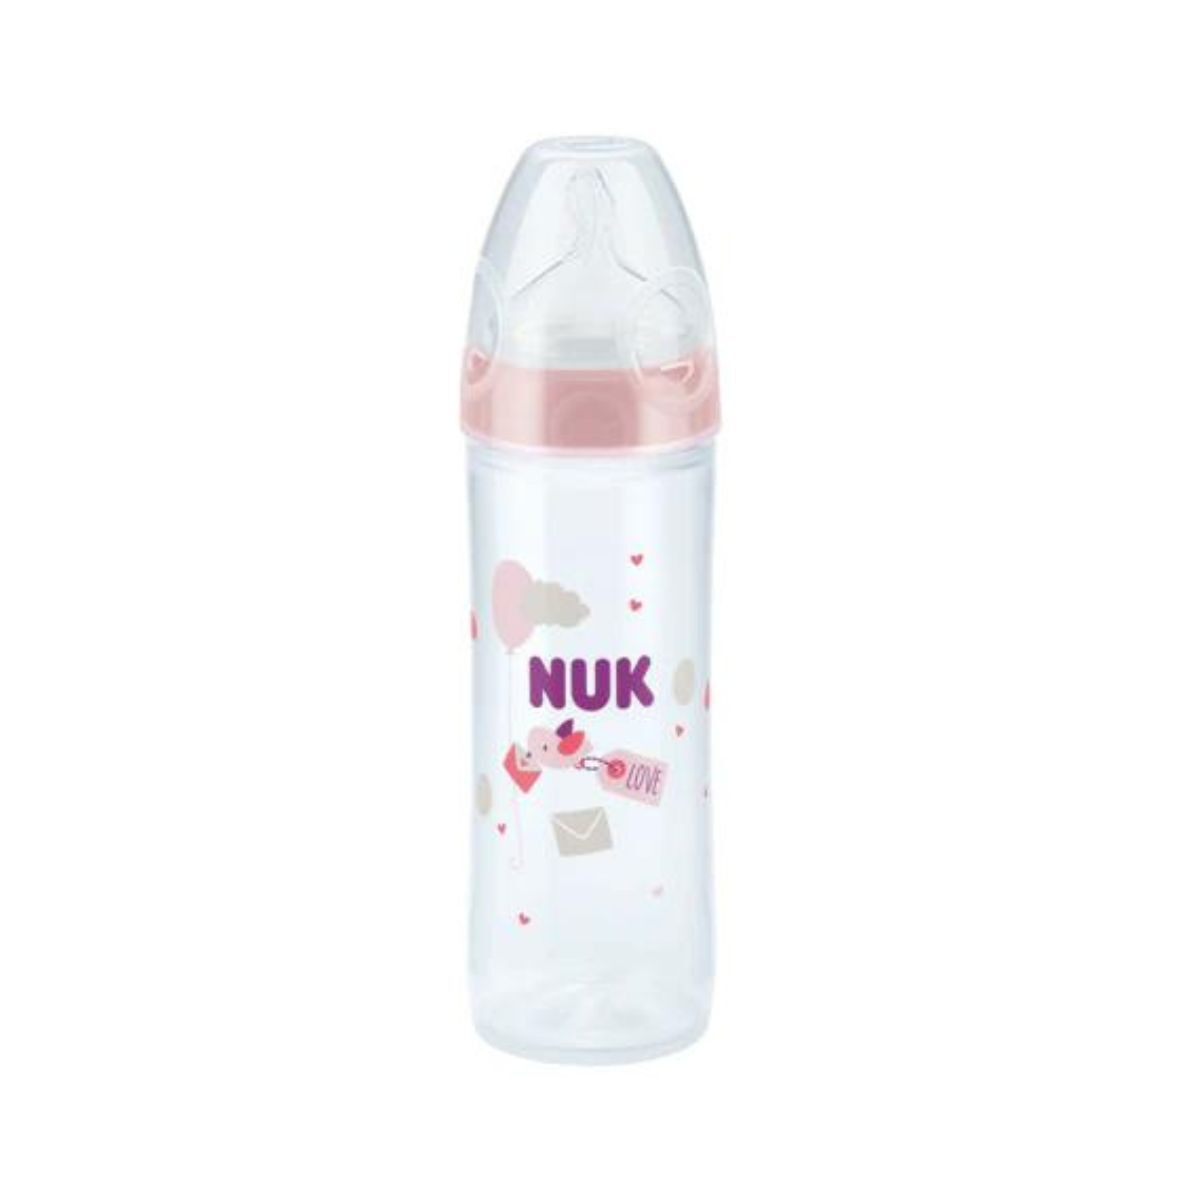 NUK Classic First Choice+ Bottle 250ml